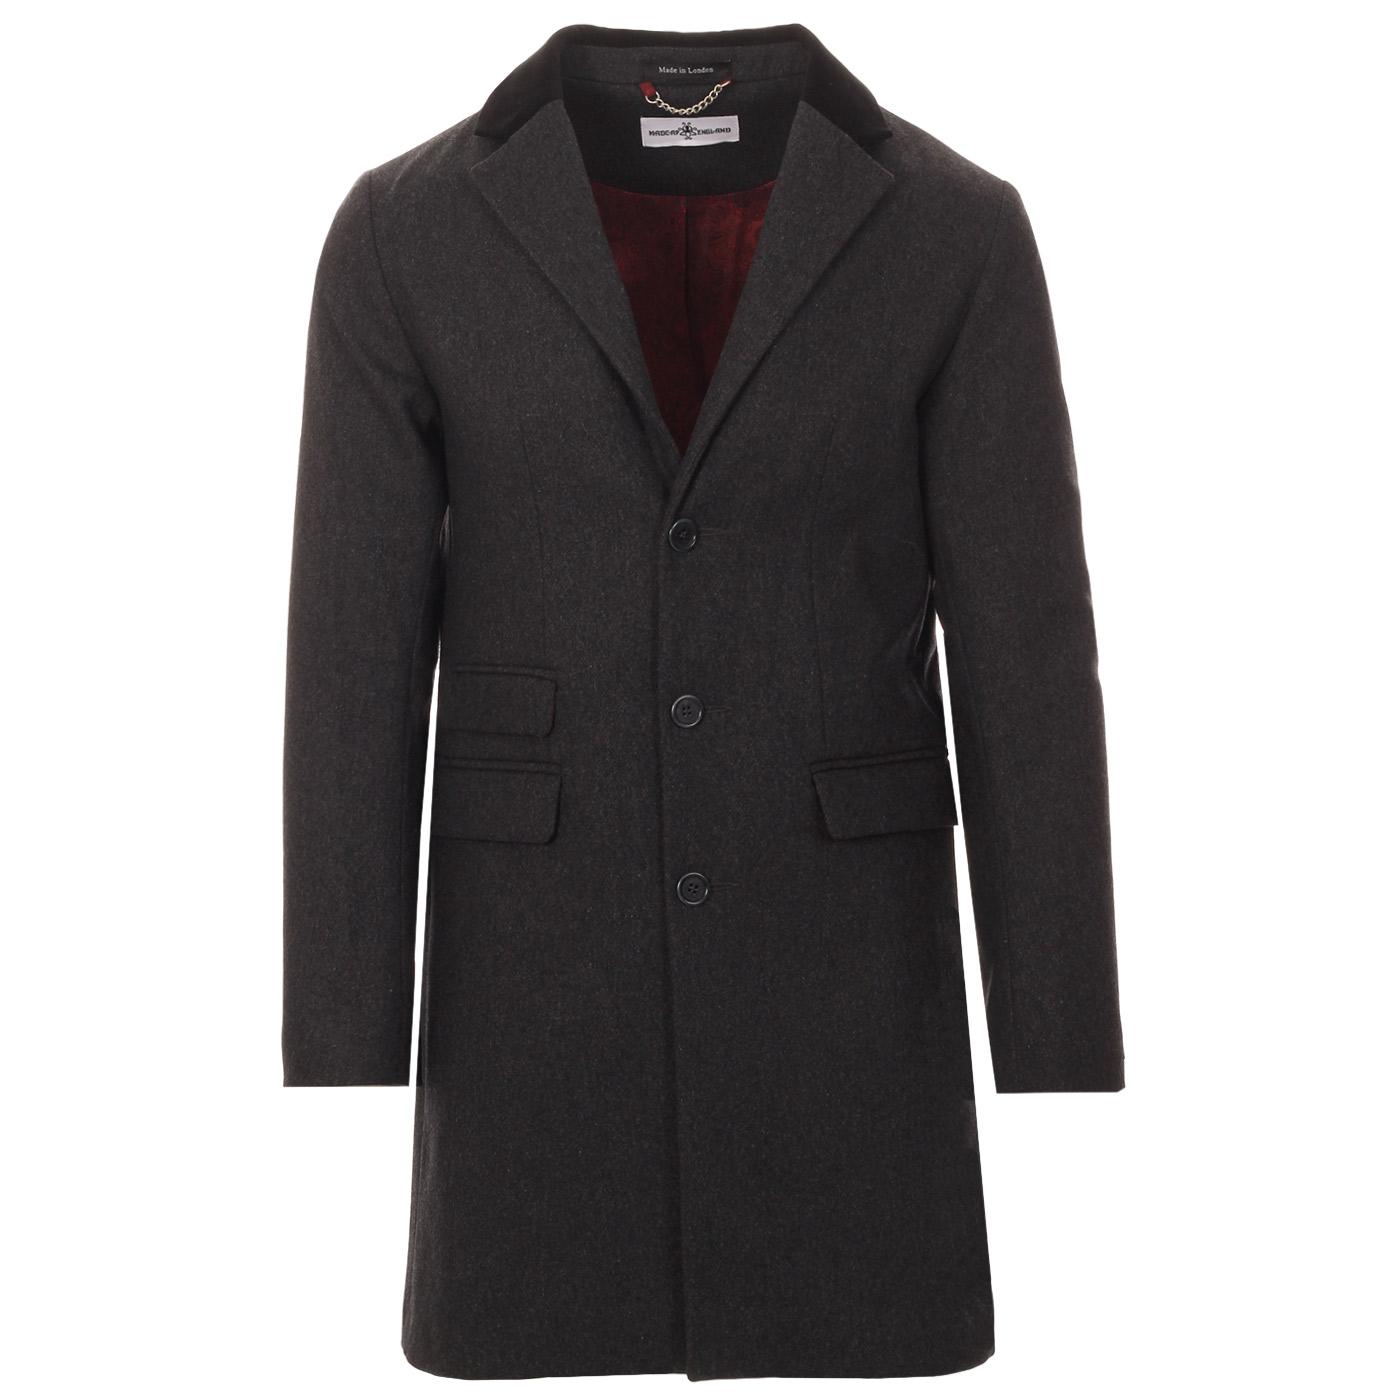 Madcap England 60s Mod Made in England Velvet Collar Wool Overcoat in Grey